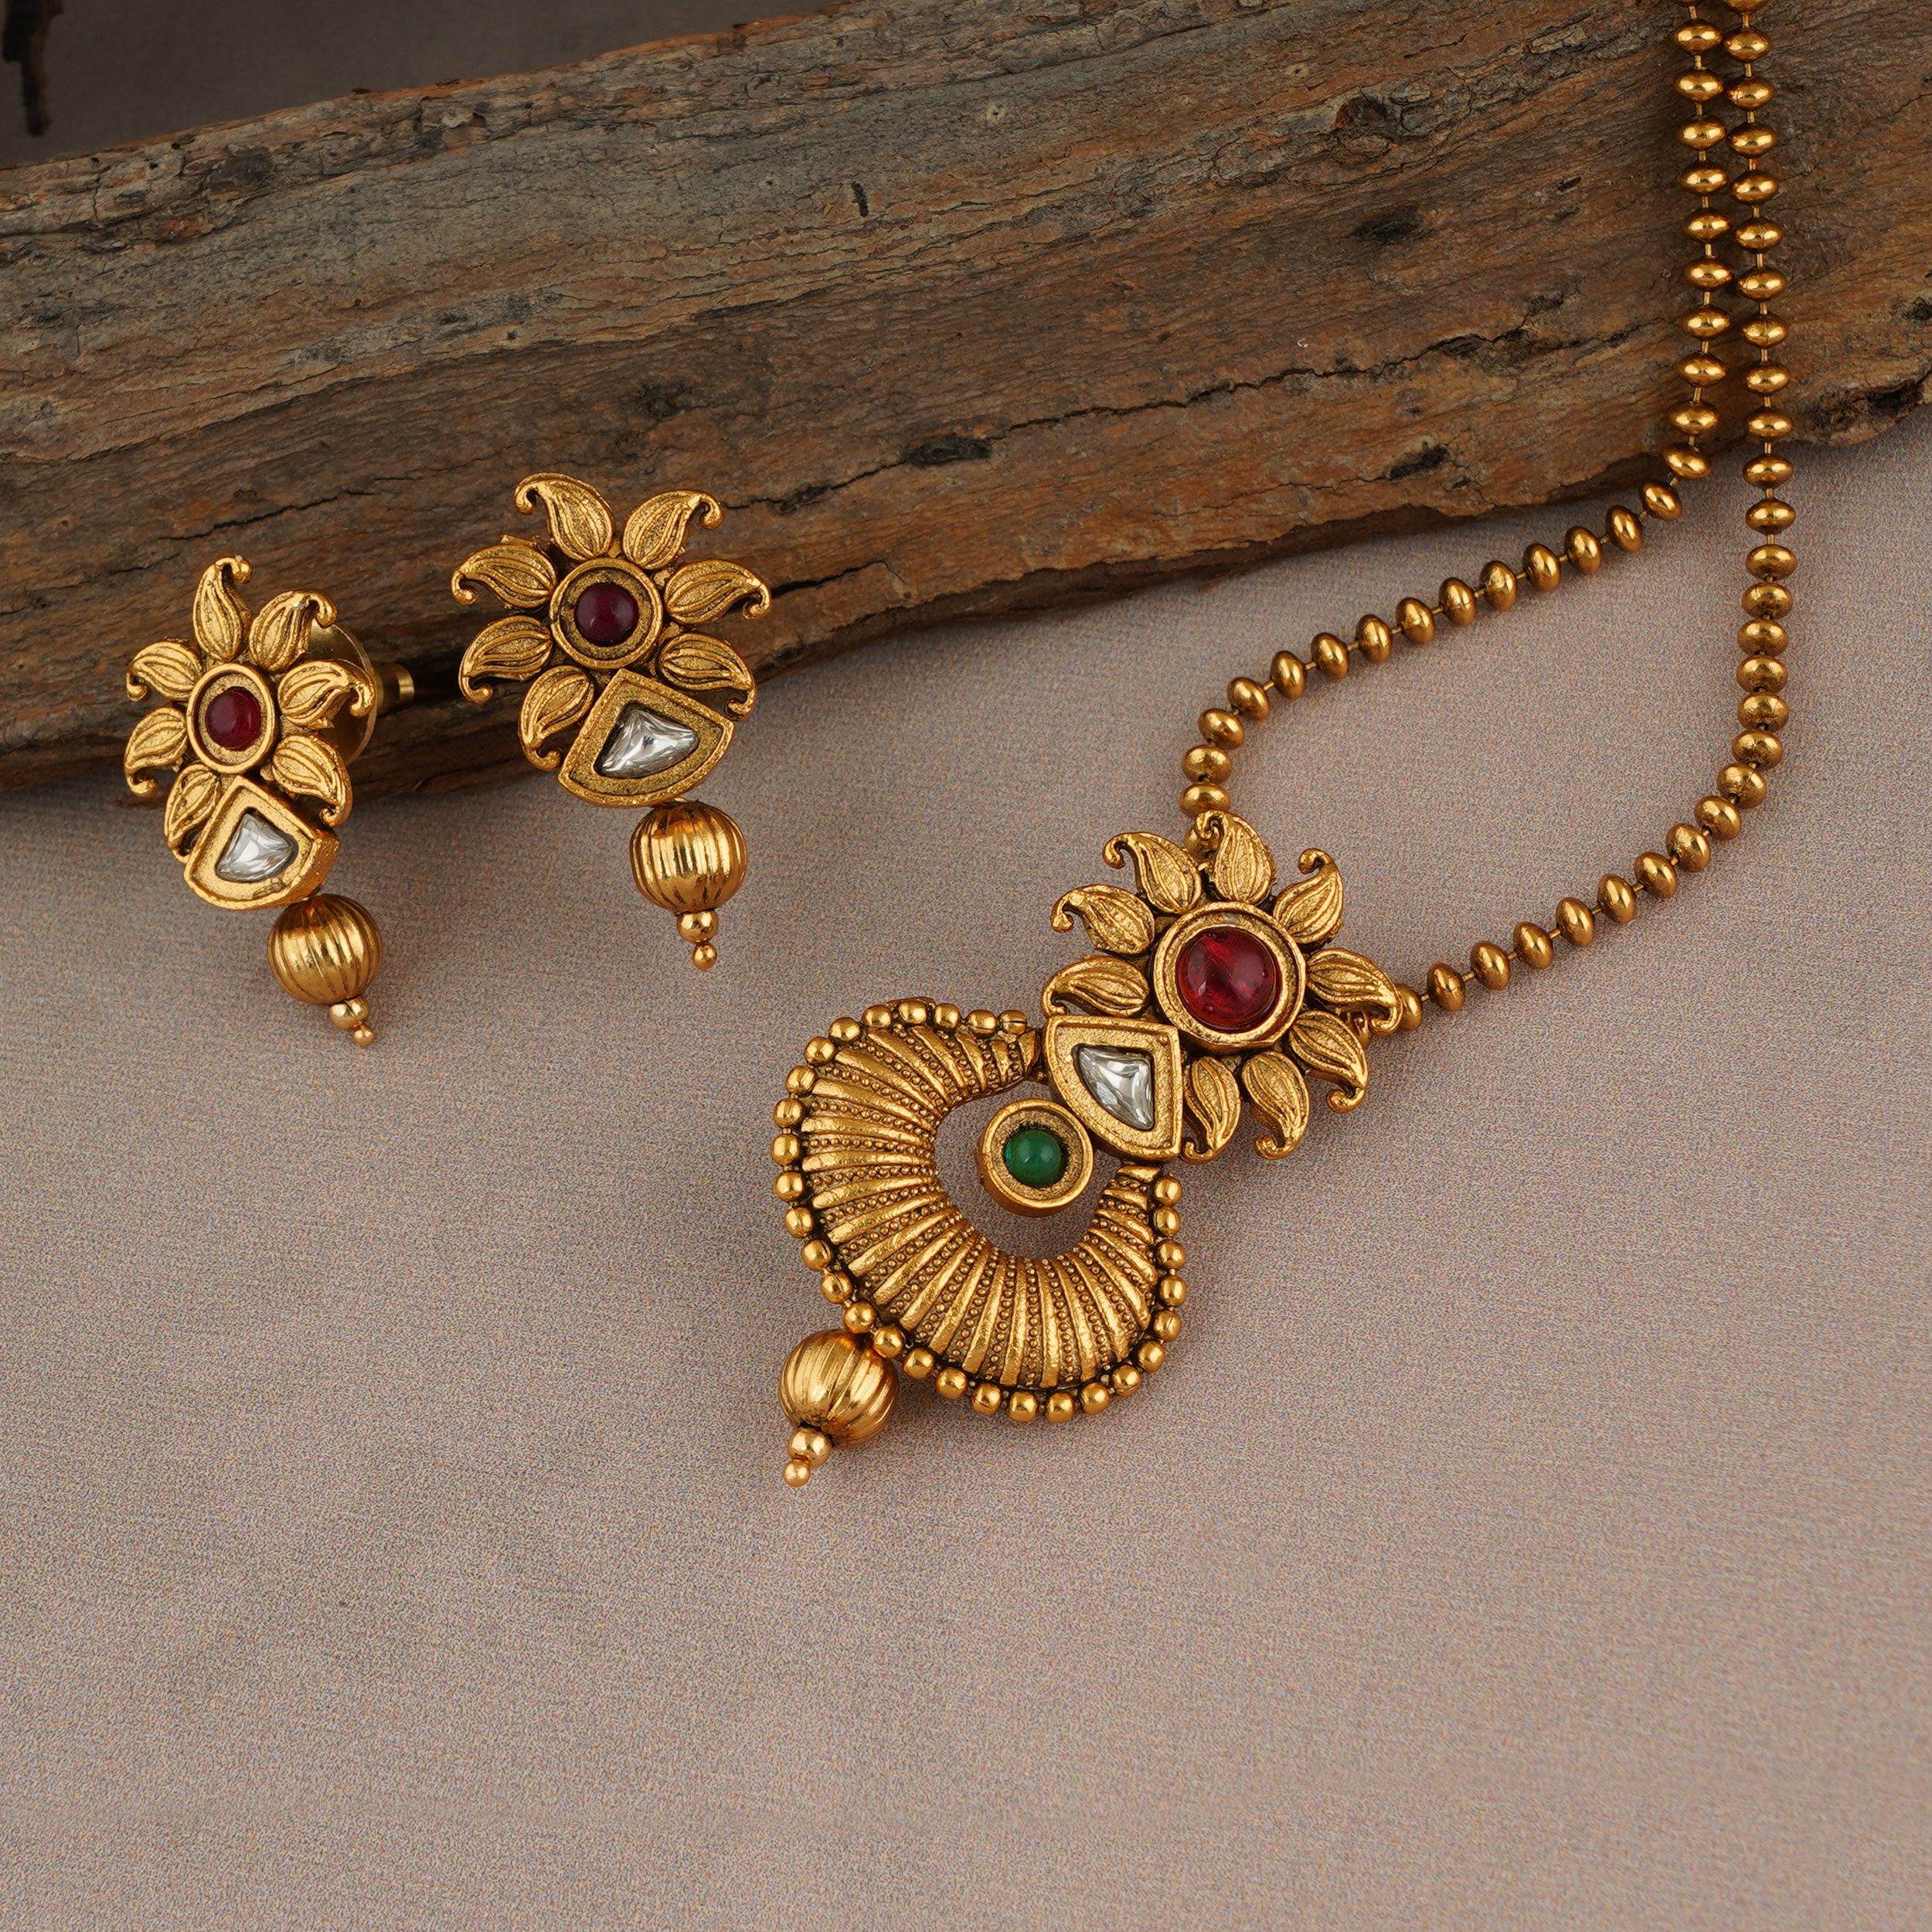 traditional big gold pendant designs